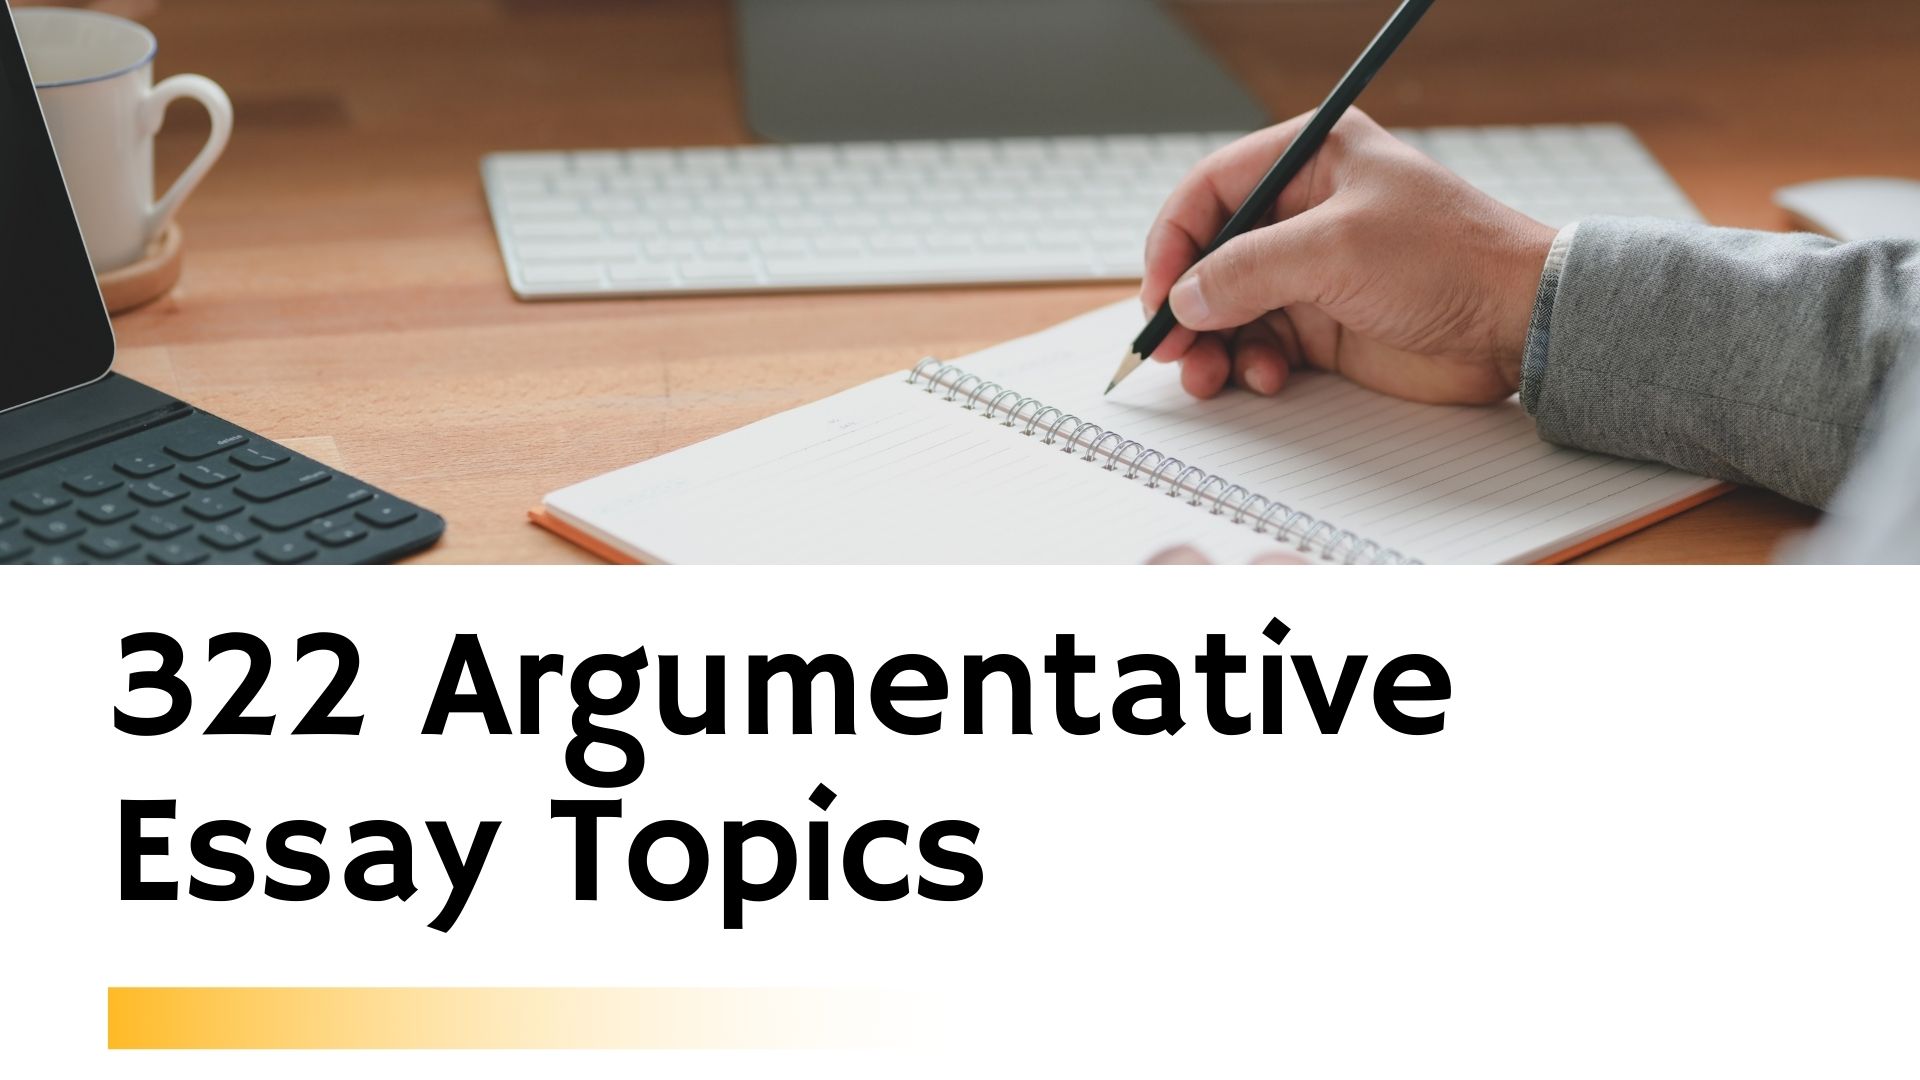 322 Argumentative Essay Topics For College Graduates